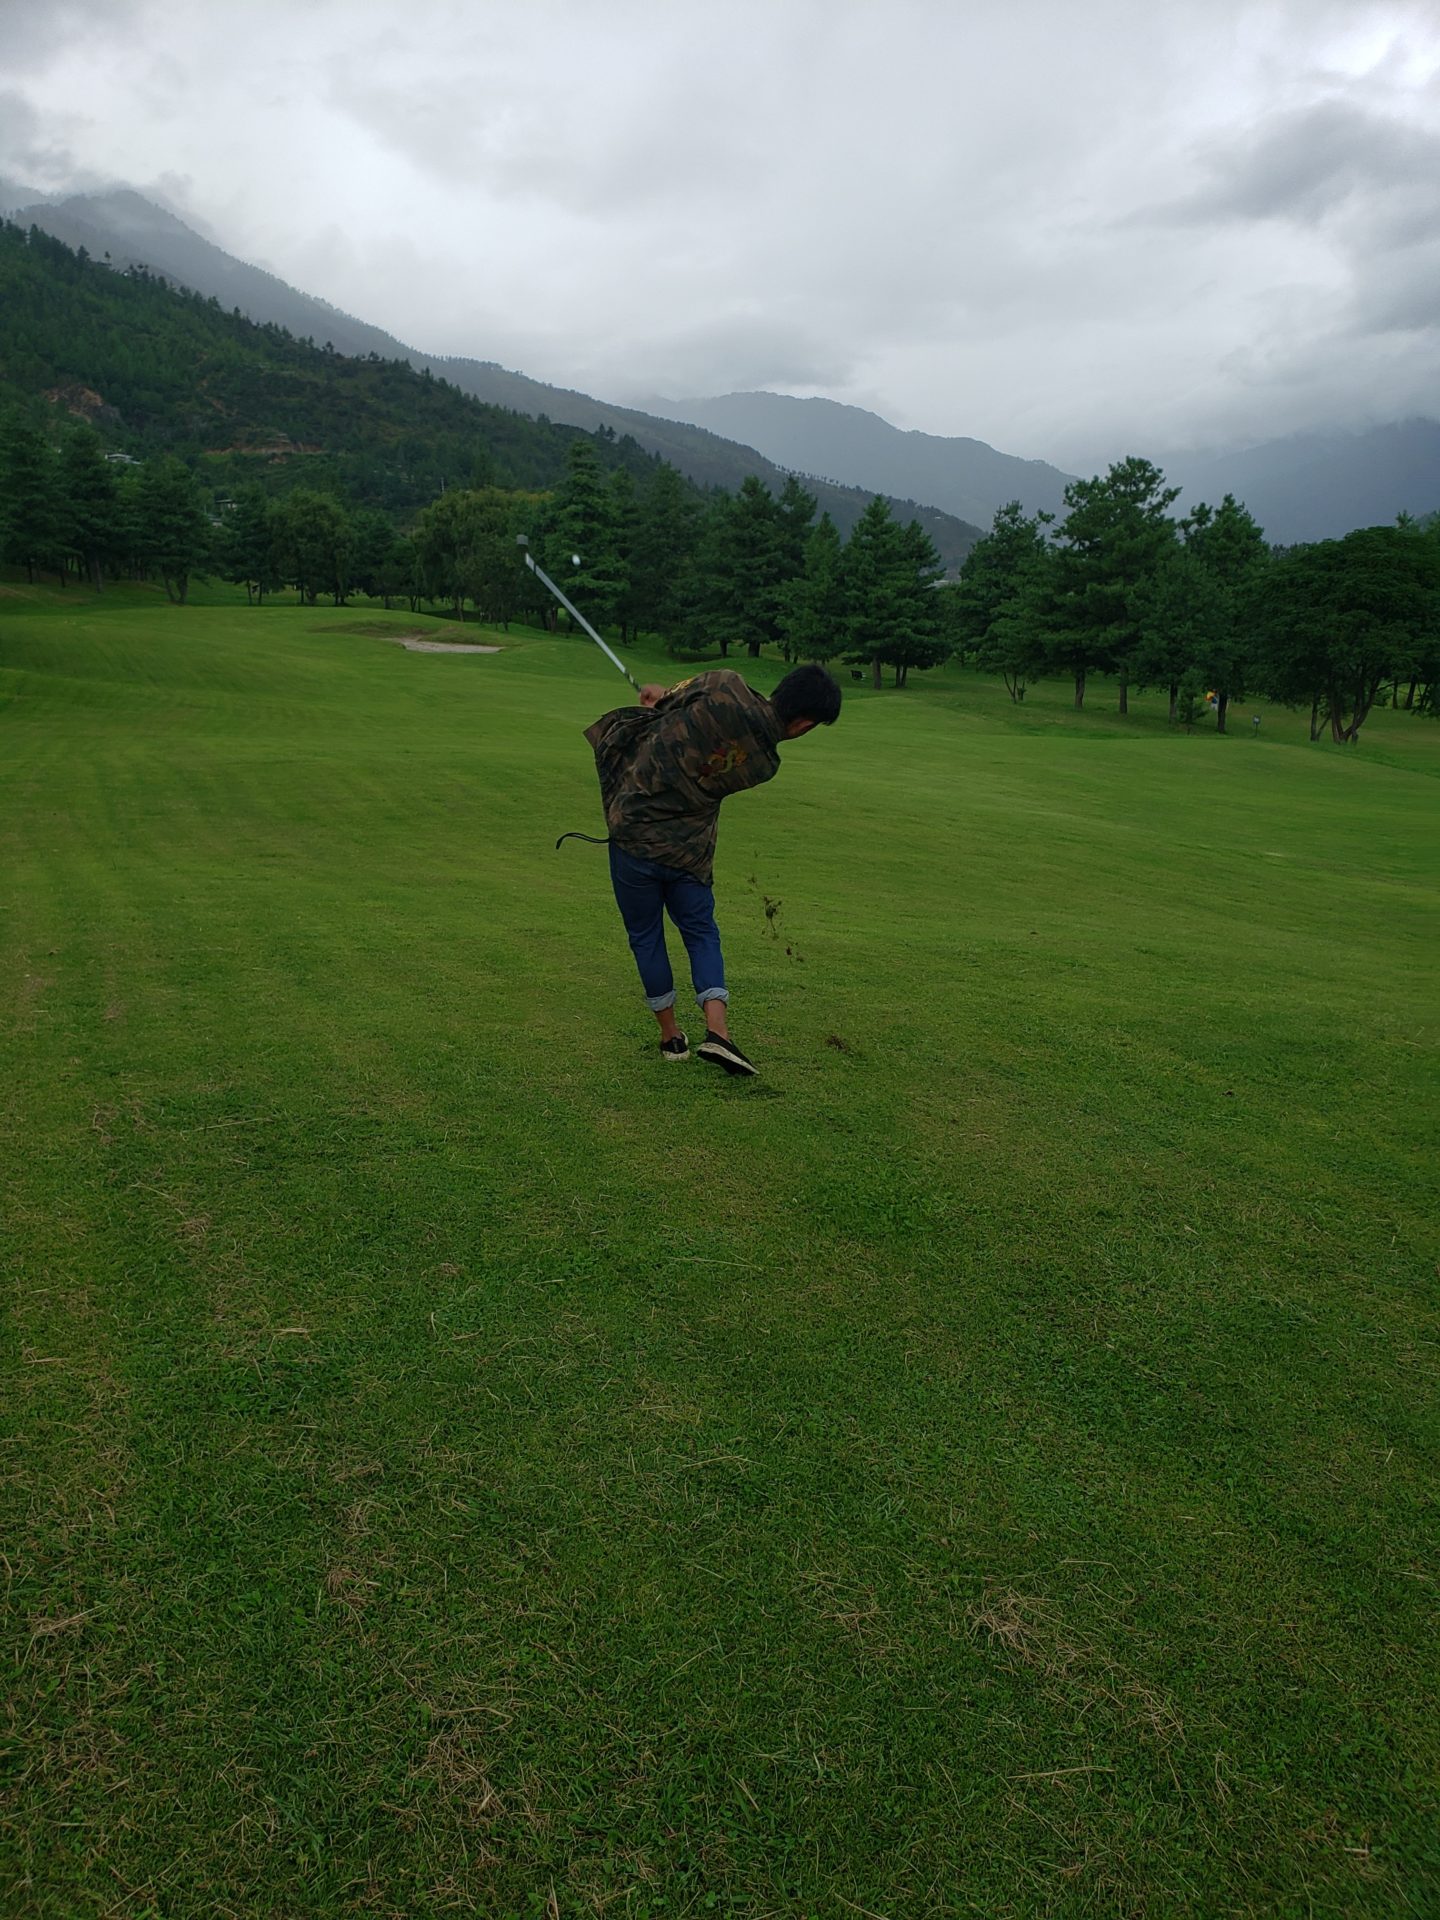 a man holding a golf club in a grassy field